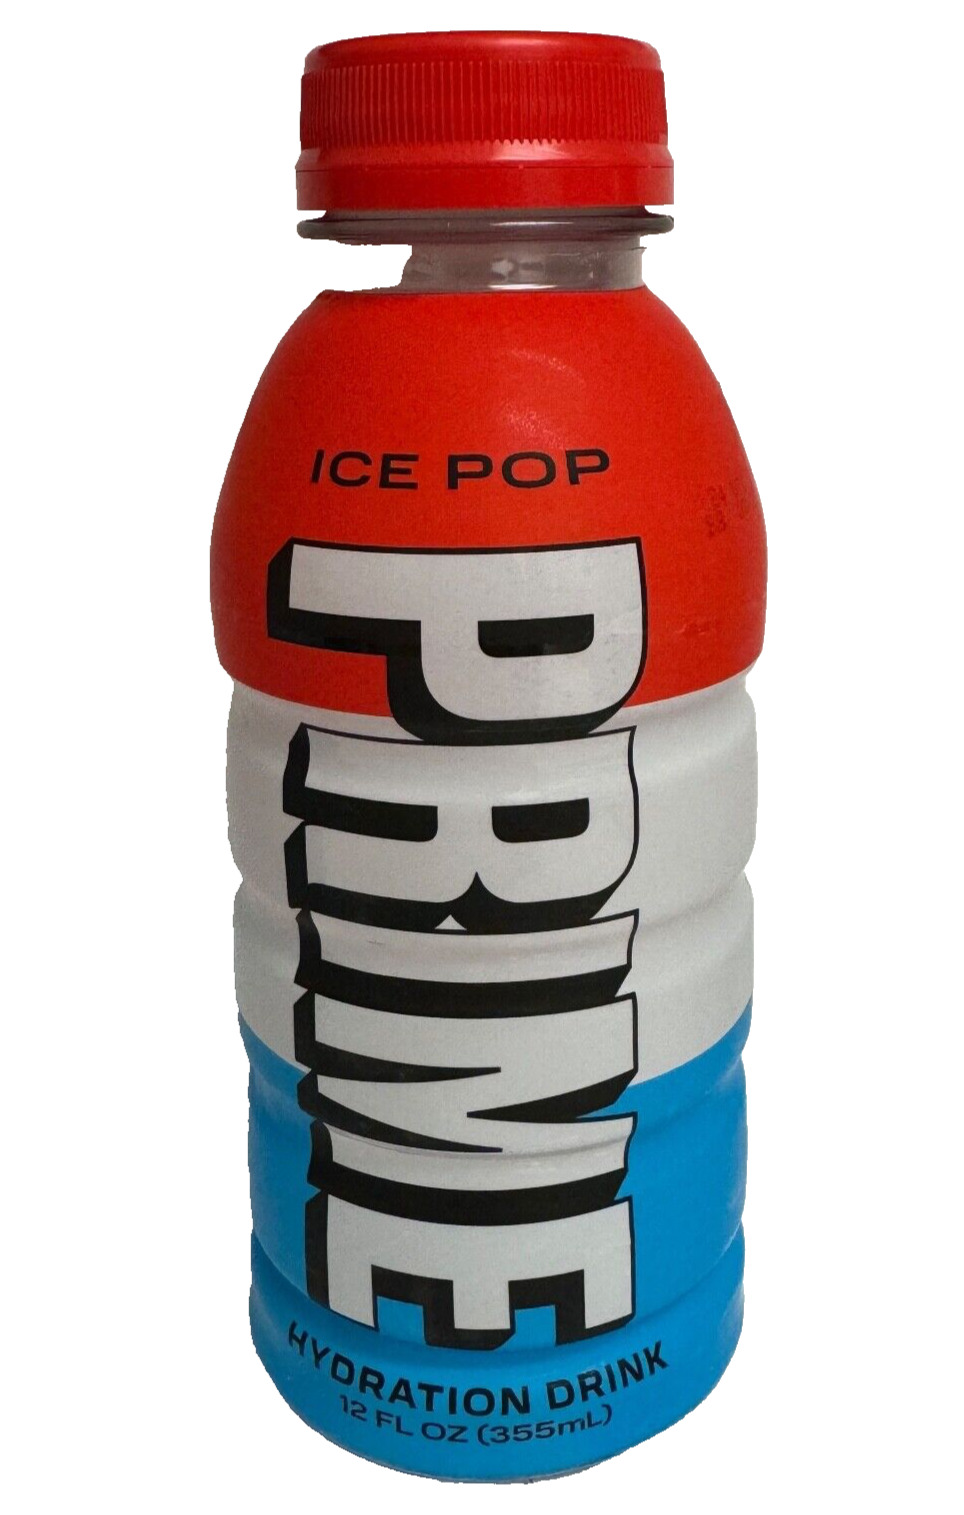 NEW SIZE MINI 12 FLOZ PRIME HYDRATION ICE POP FLAVOR DRINK 1 FULL BOTTLE BUY IT